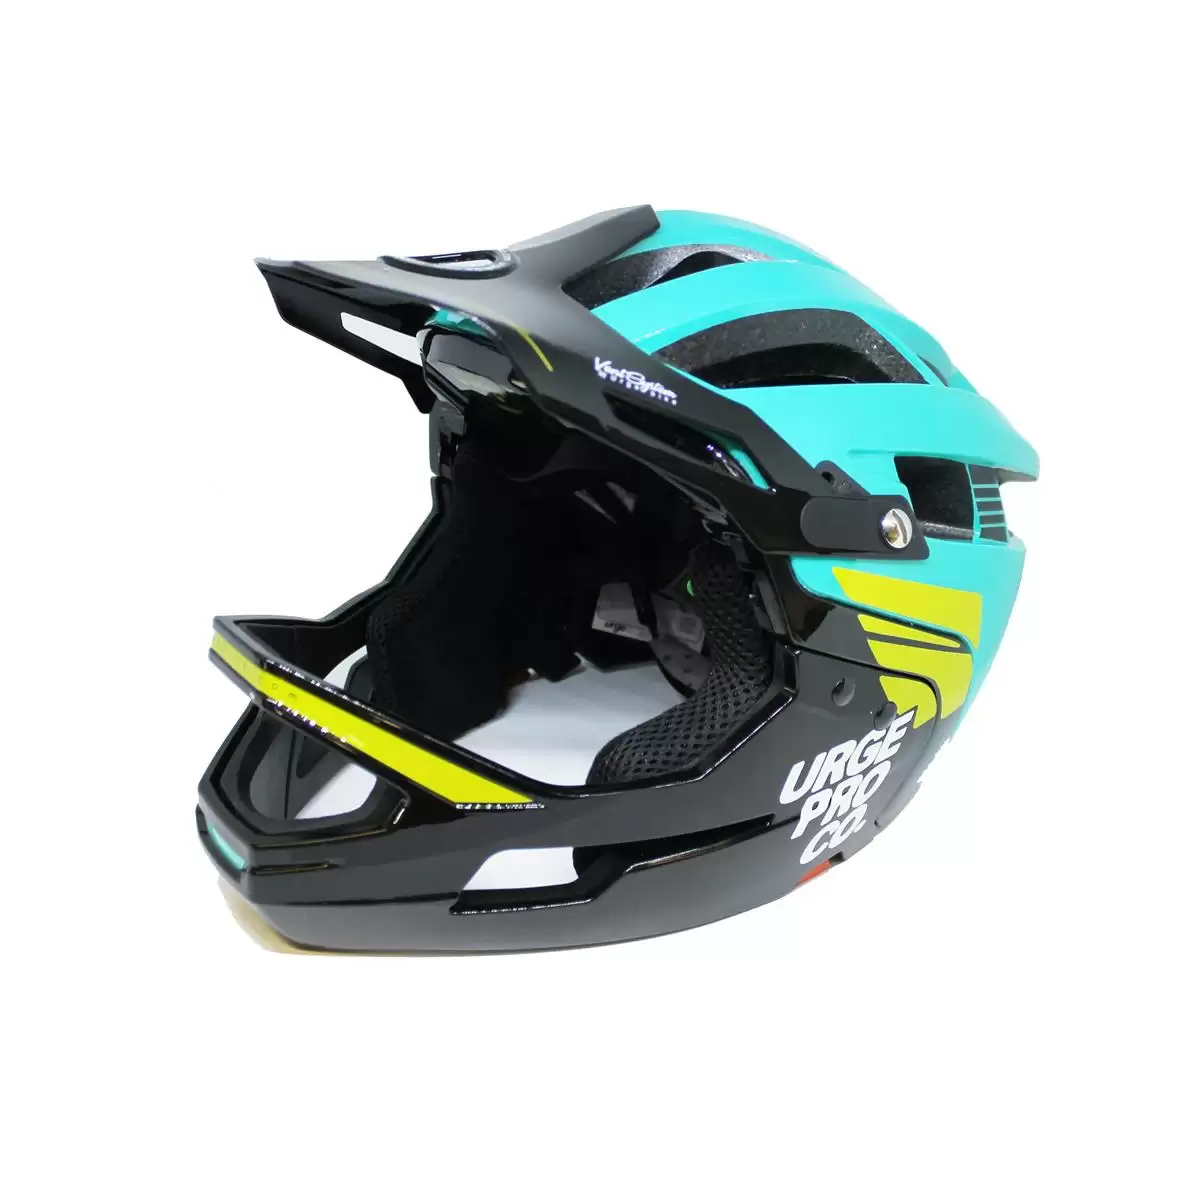 Full face helmet Gringo de la Pampa light blue size L/XL (58-61) #2